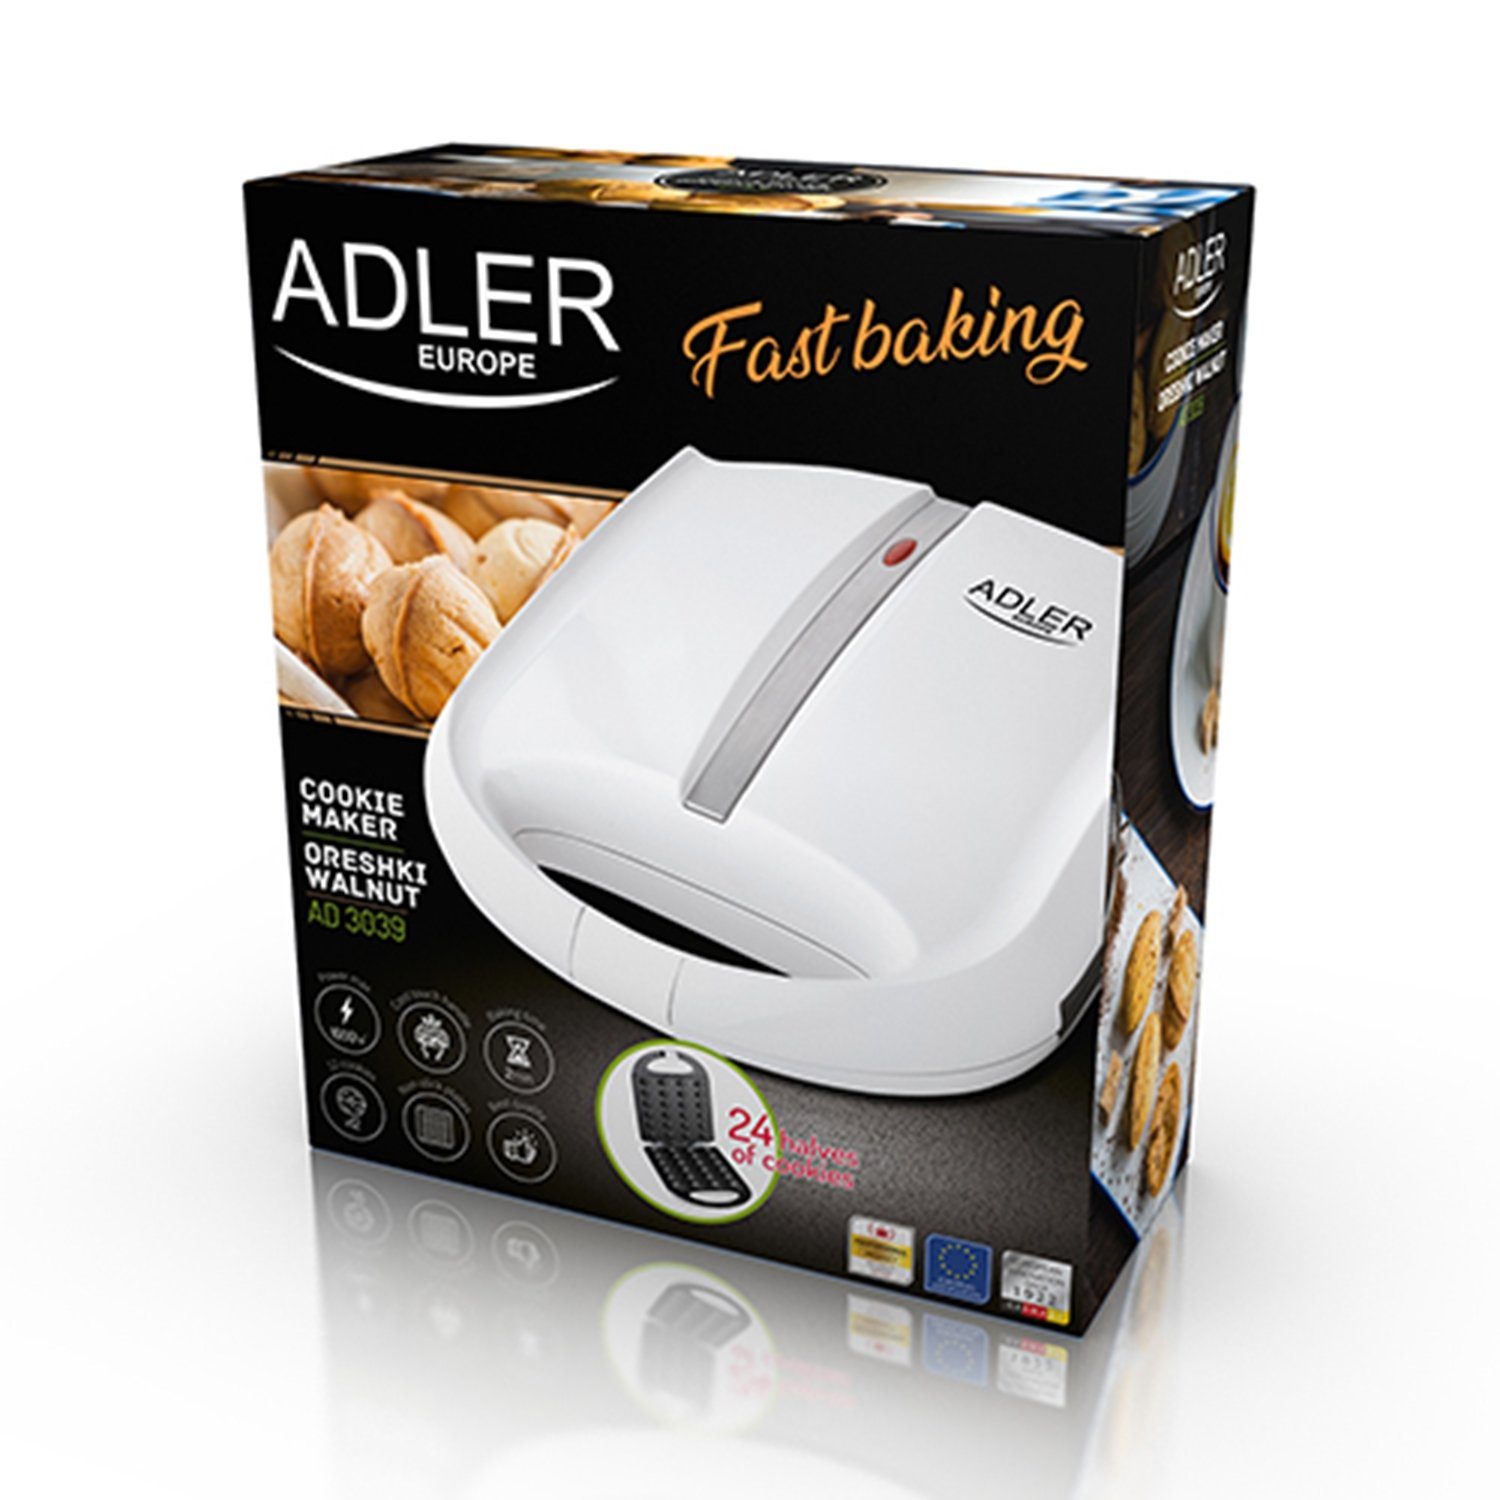 Adler Toaster AD 3039, Toaster Nüsse für 24 Haselnüsse Erdnüsse Stk